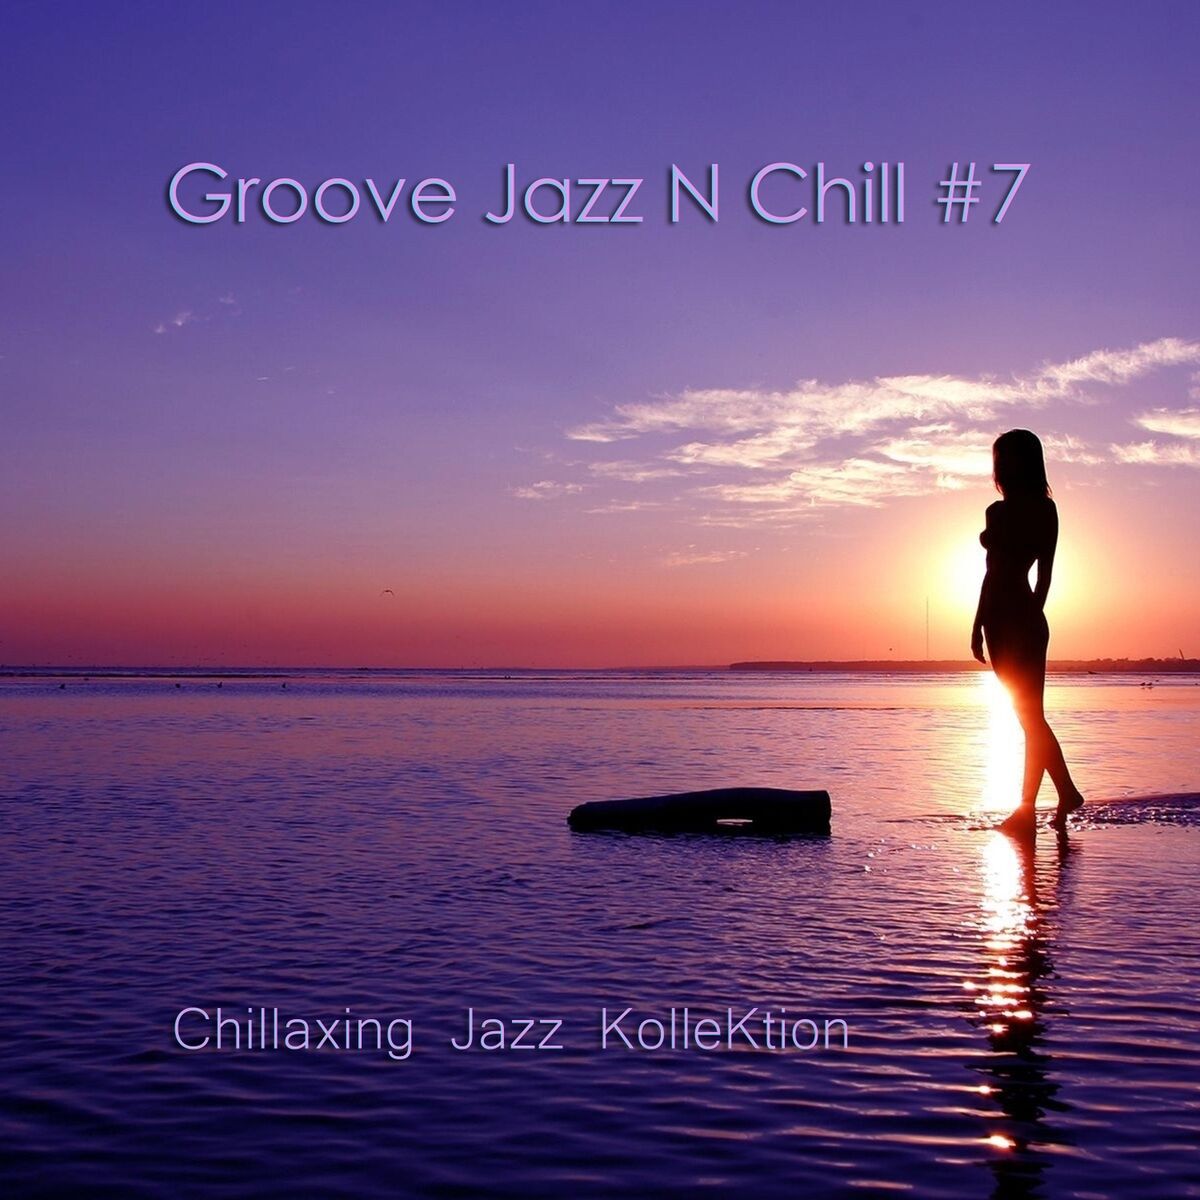 Chillaxing Jazz Kollektion: albums